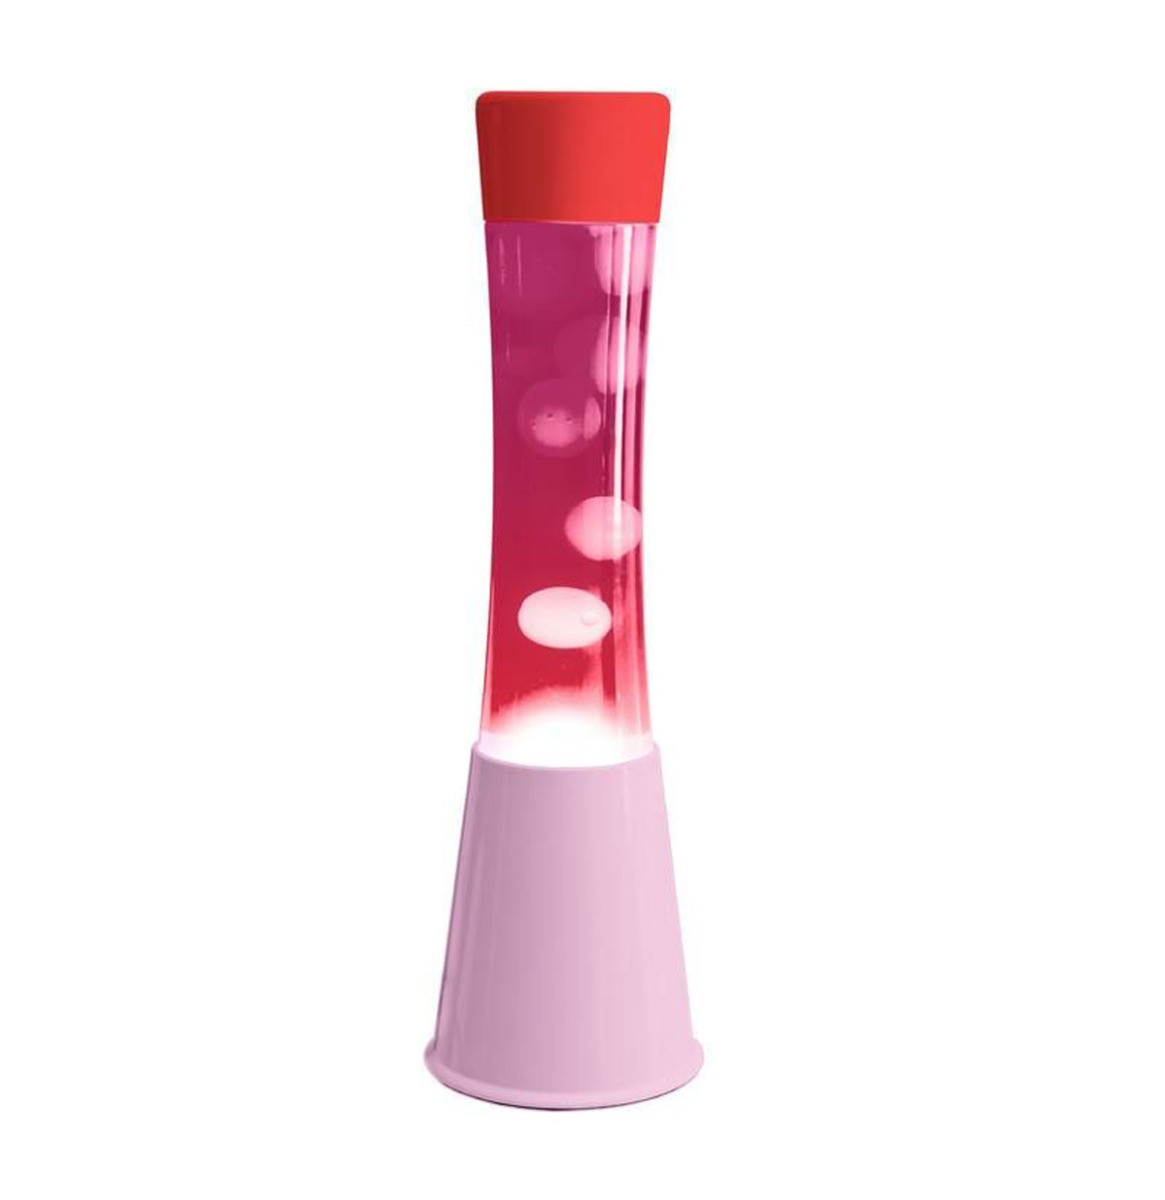 Fisura Lava Lamp - Roze Voet En Rode Top Met Roze Vloeistof En Witte Lava